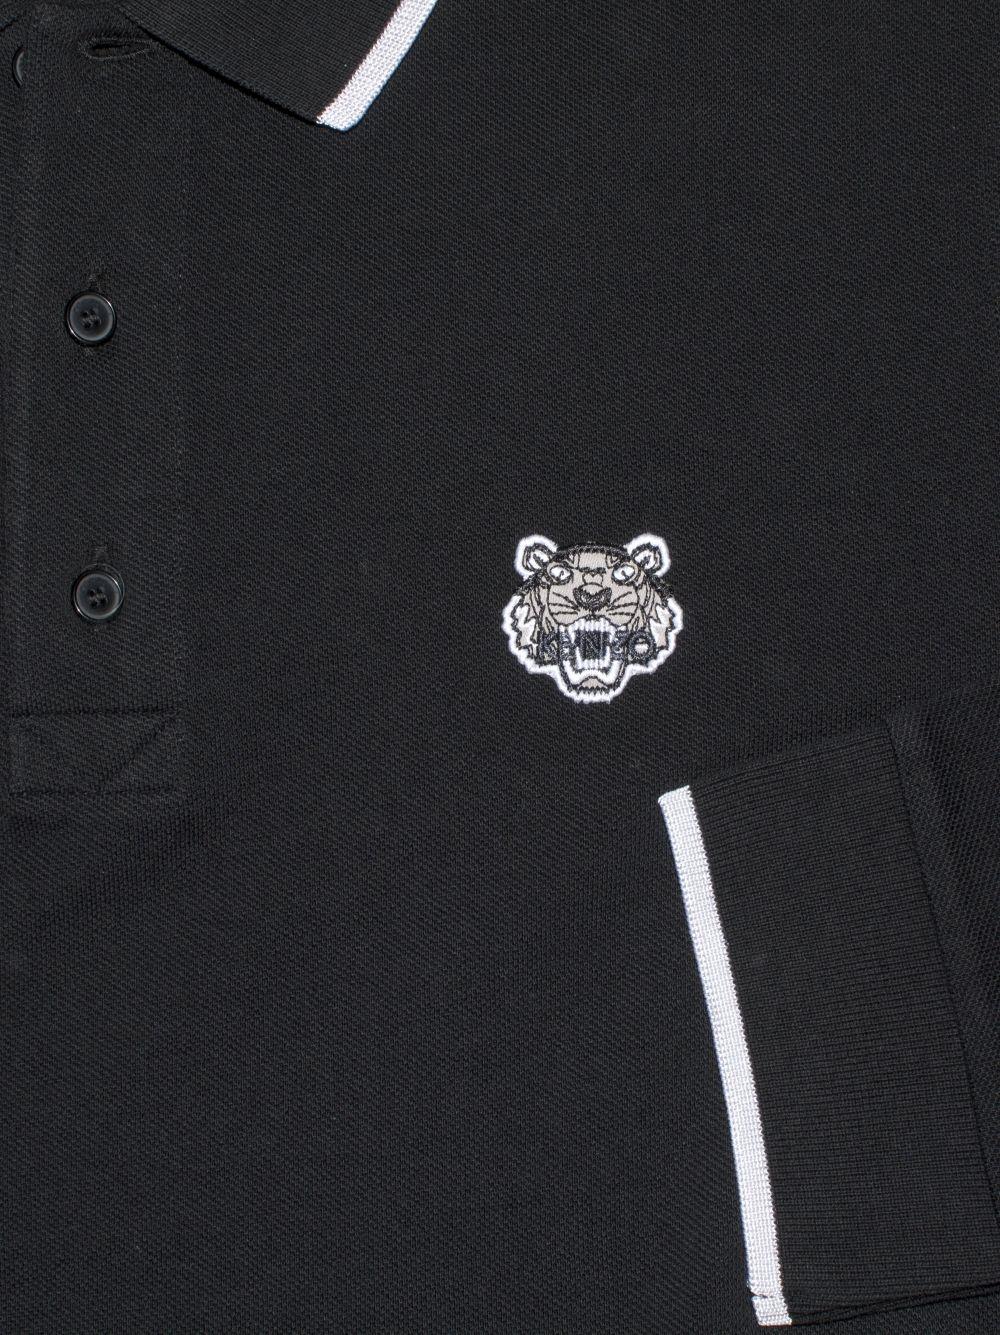 Black Polo Logo - Kenzo Clothing. Mens Kenzo Long Sleeve Polo Shirts